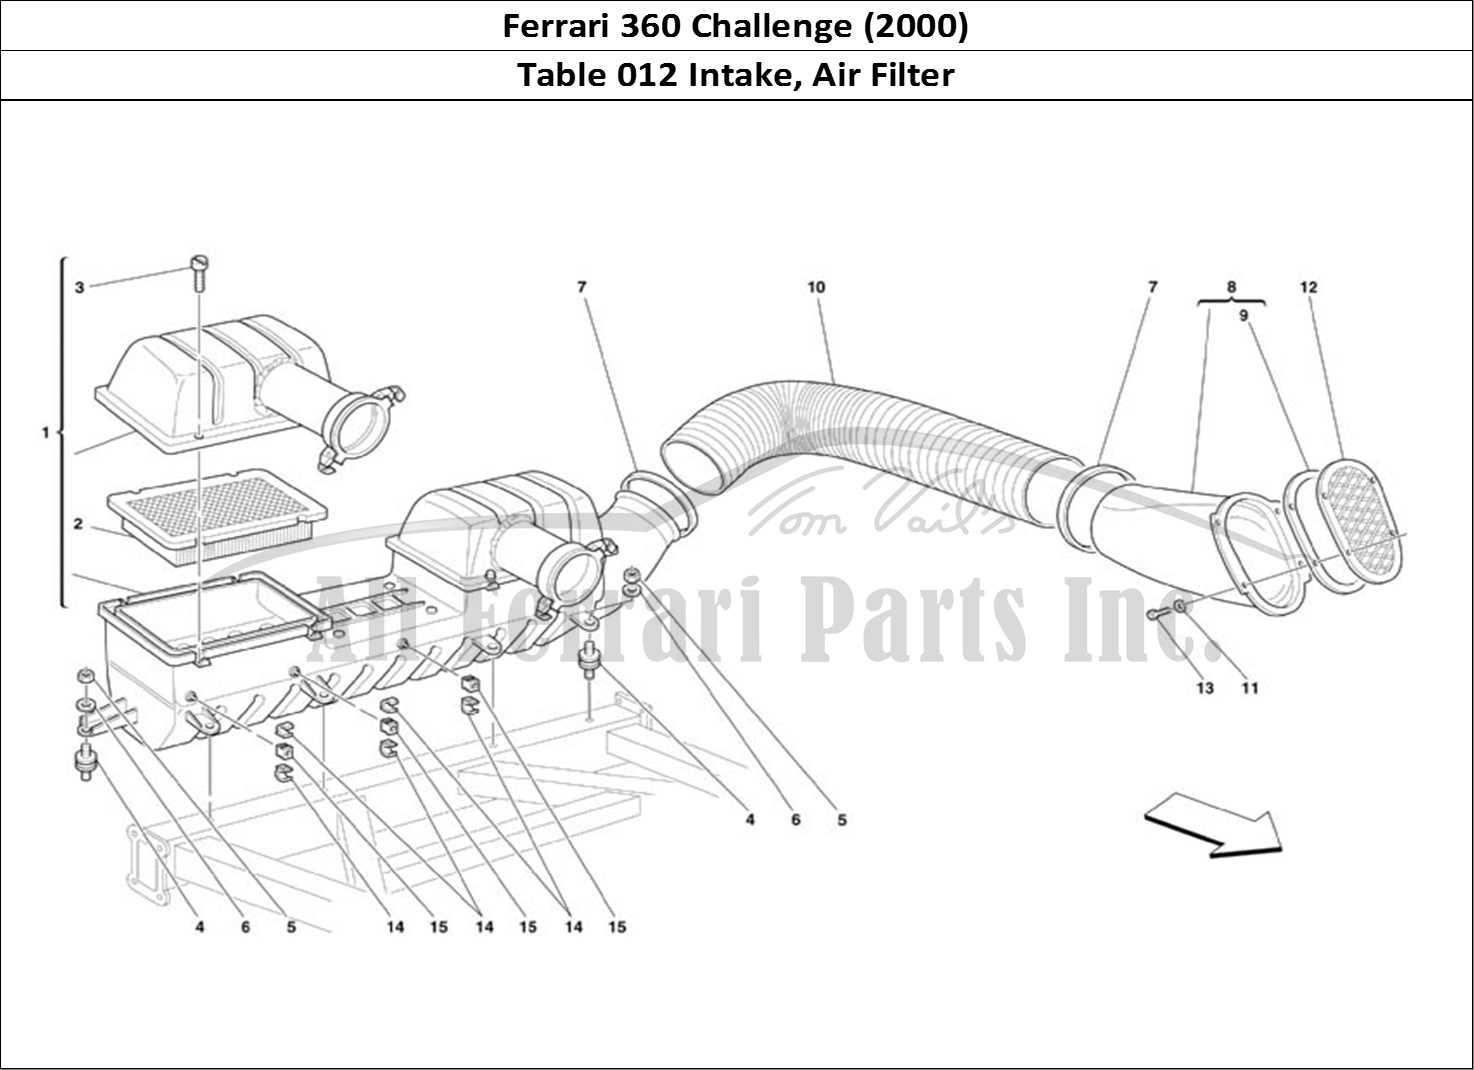 Ferrari Parts Ferrari 360 Challenge (2000) Page 012 Air Intake